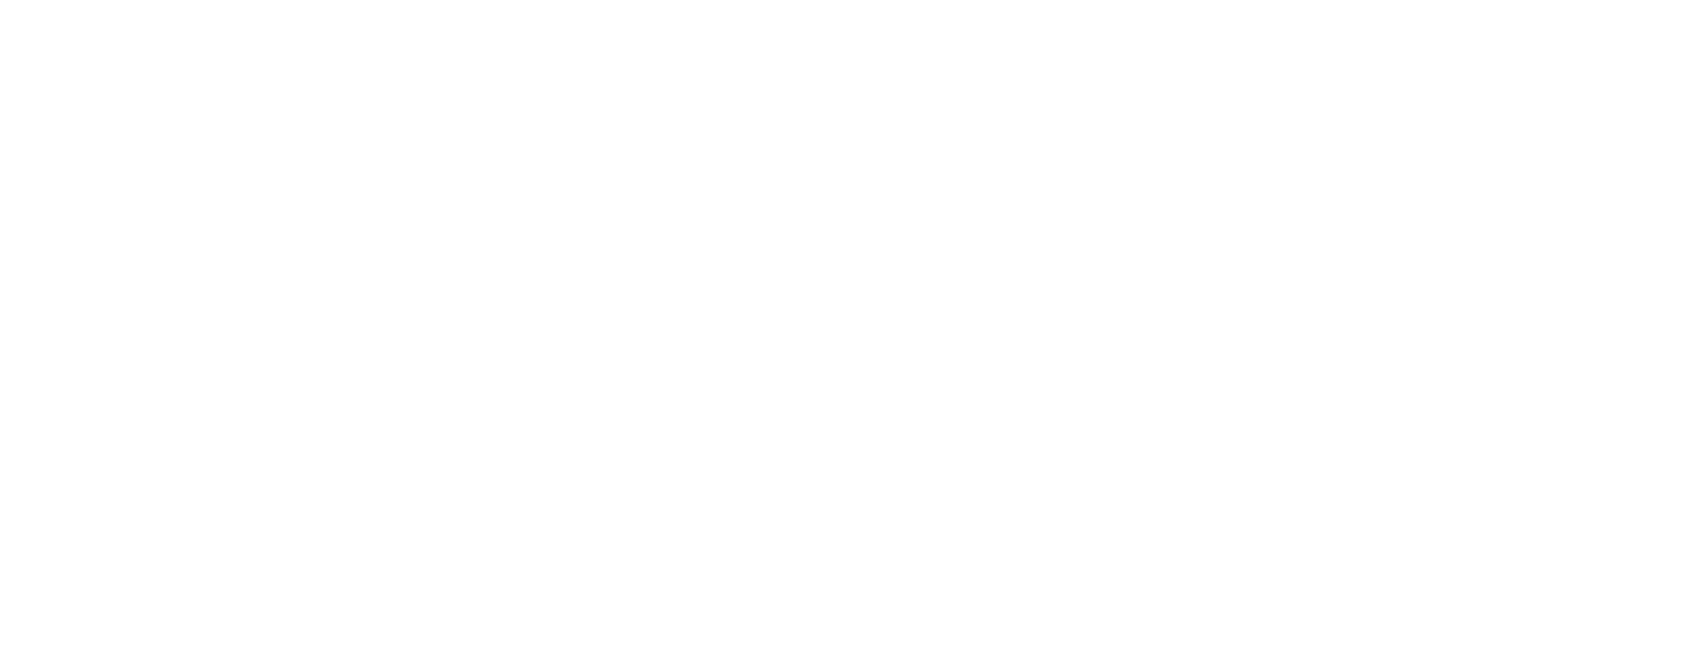 Progresa DigitalMente con Facebook.